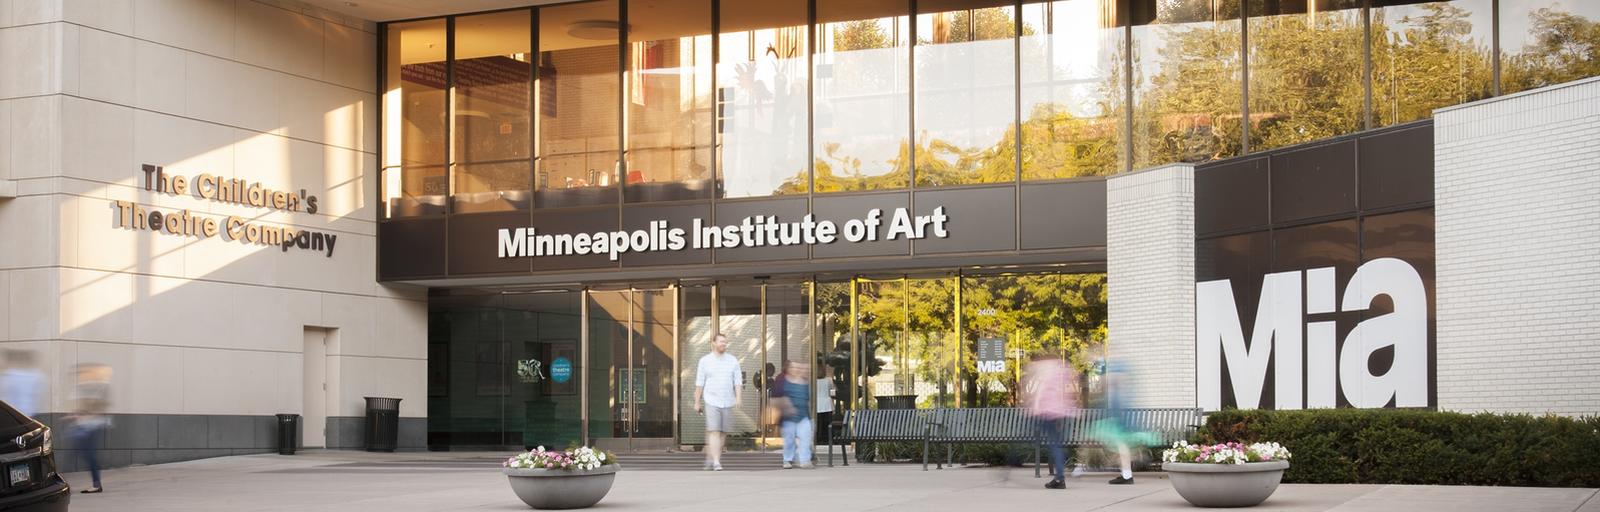 Entrance to Mia, the Minneapolis Institute of Art